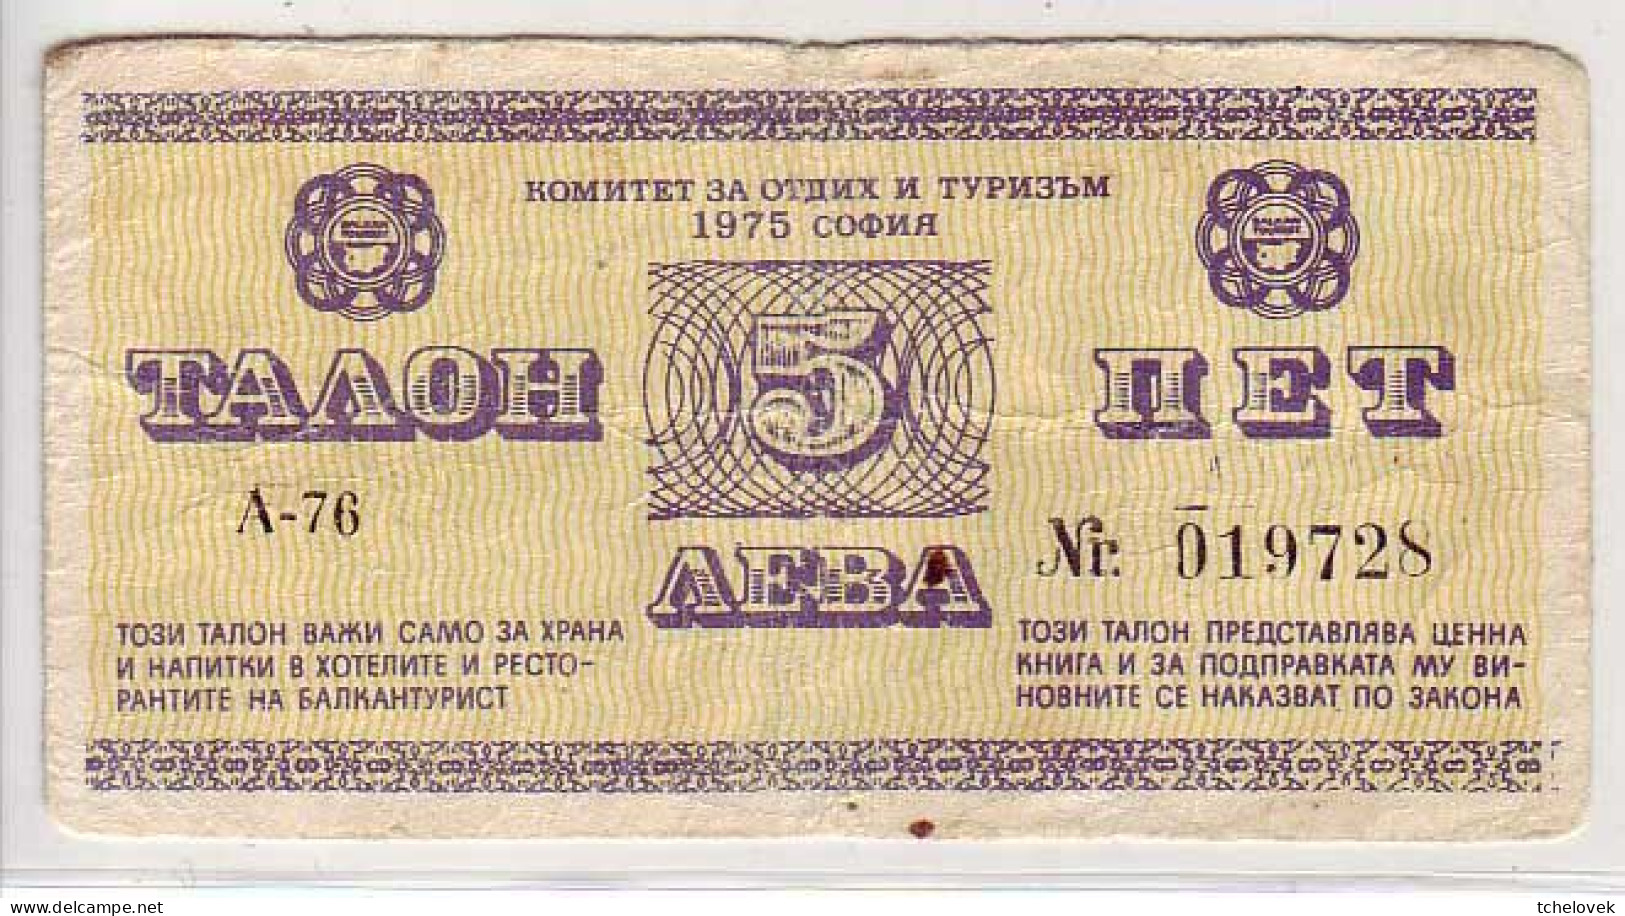 (Billets). Bulgarie Bulgaria. Foreing Exchange Certificate. Rare. Balkan Tourist. 1975. 5 Leva Serie A-76 N° 019728 - Bulgarije